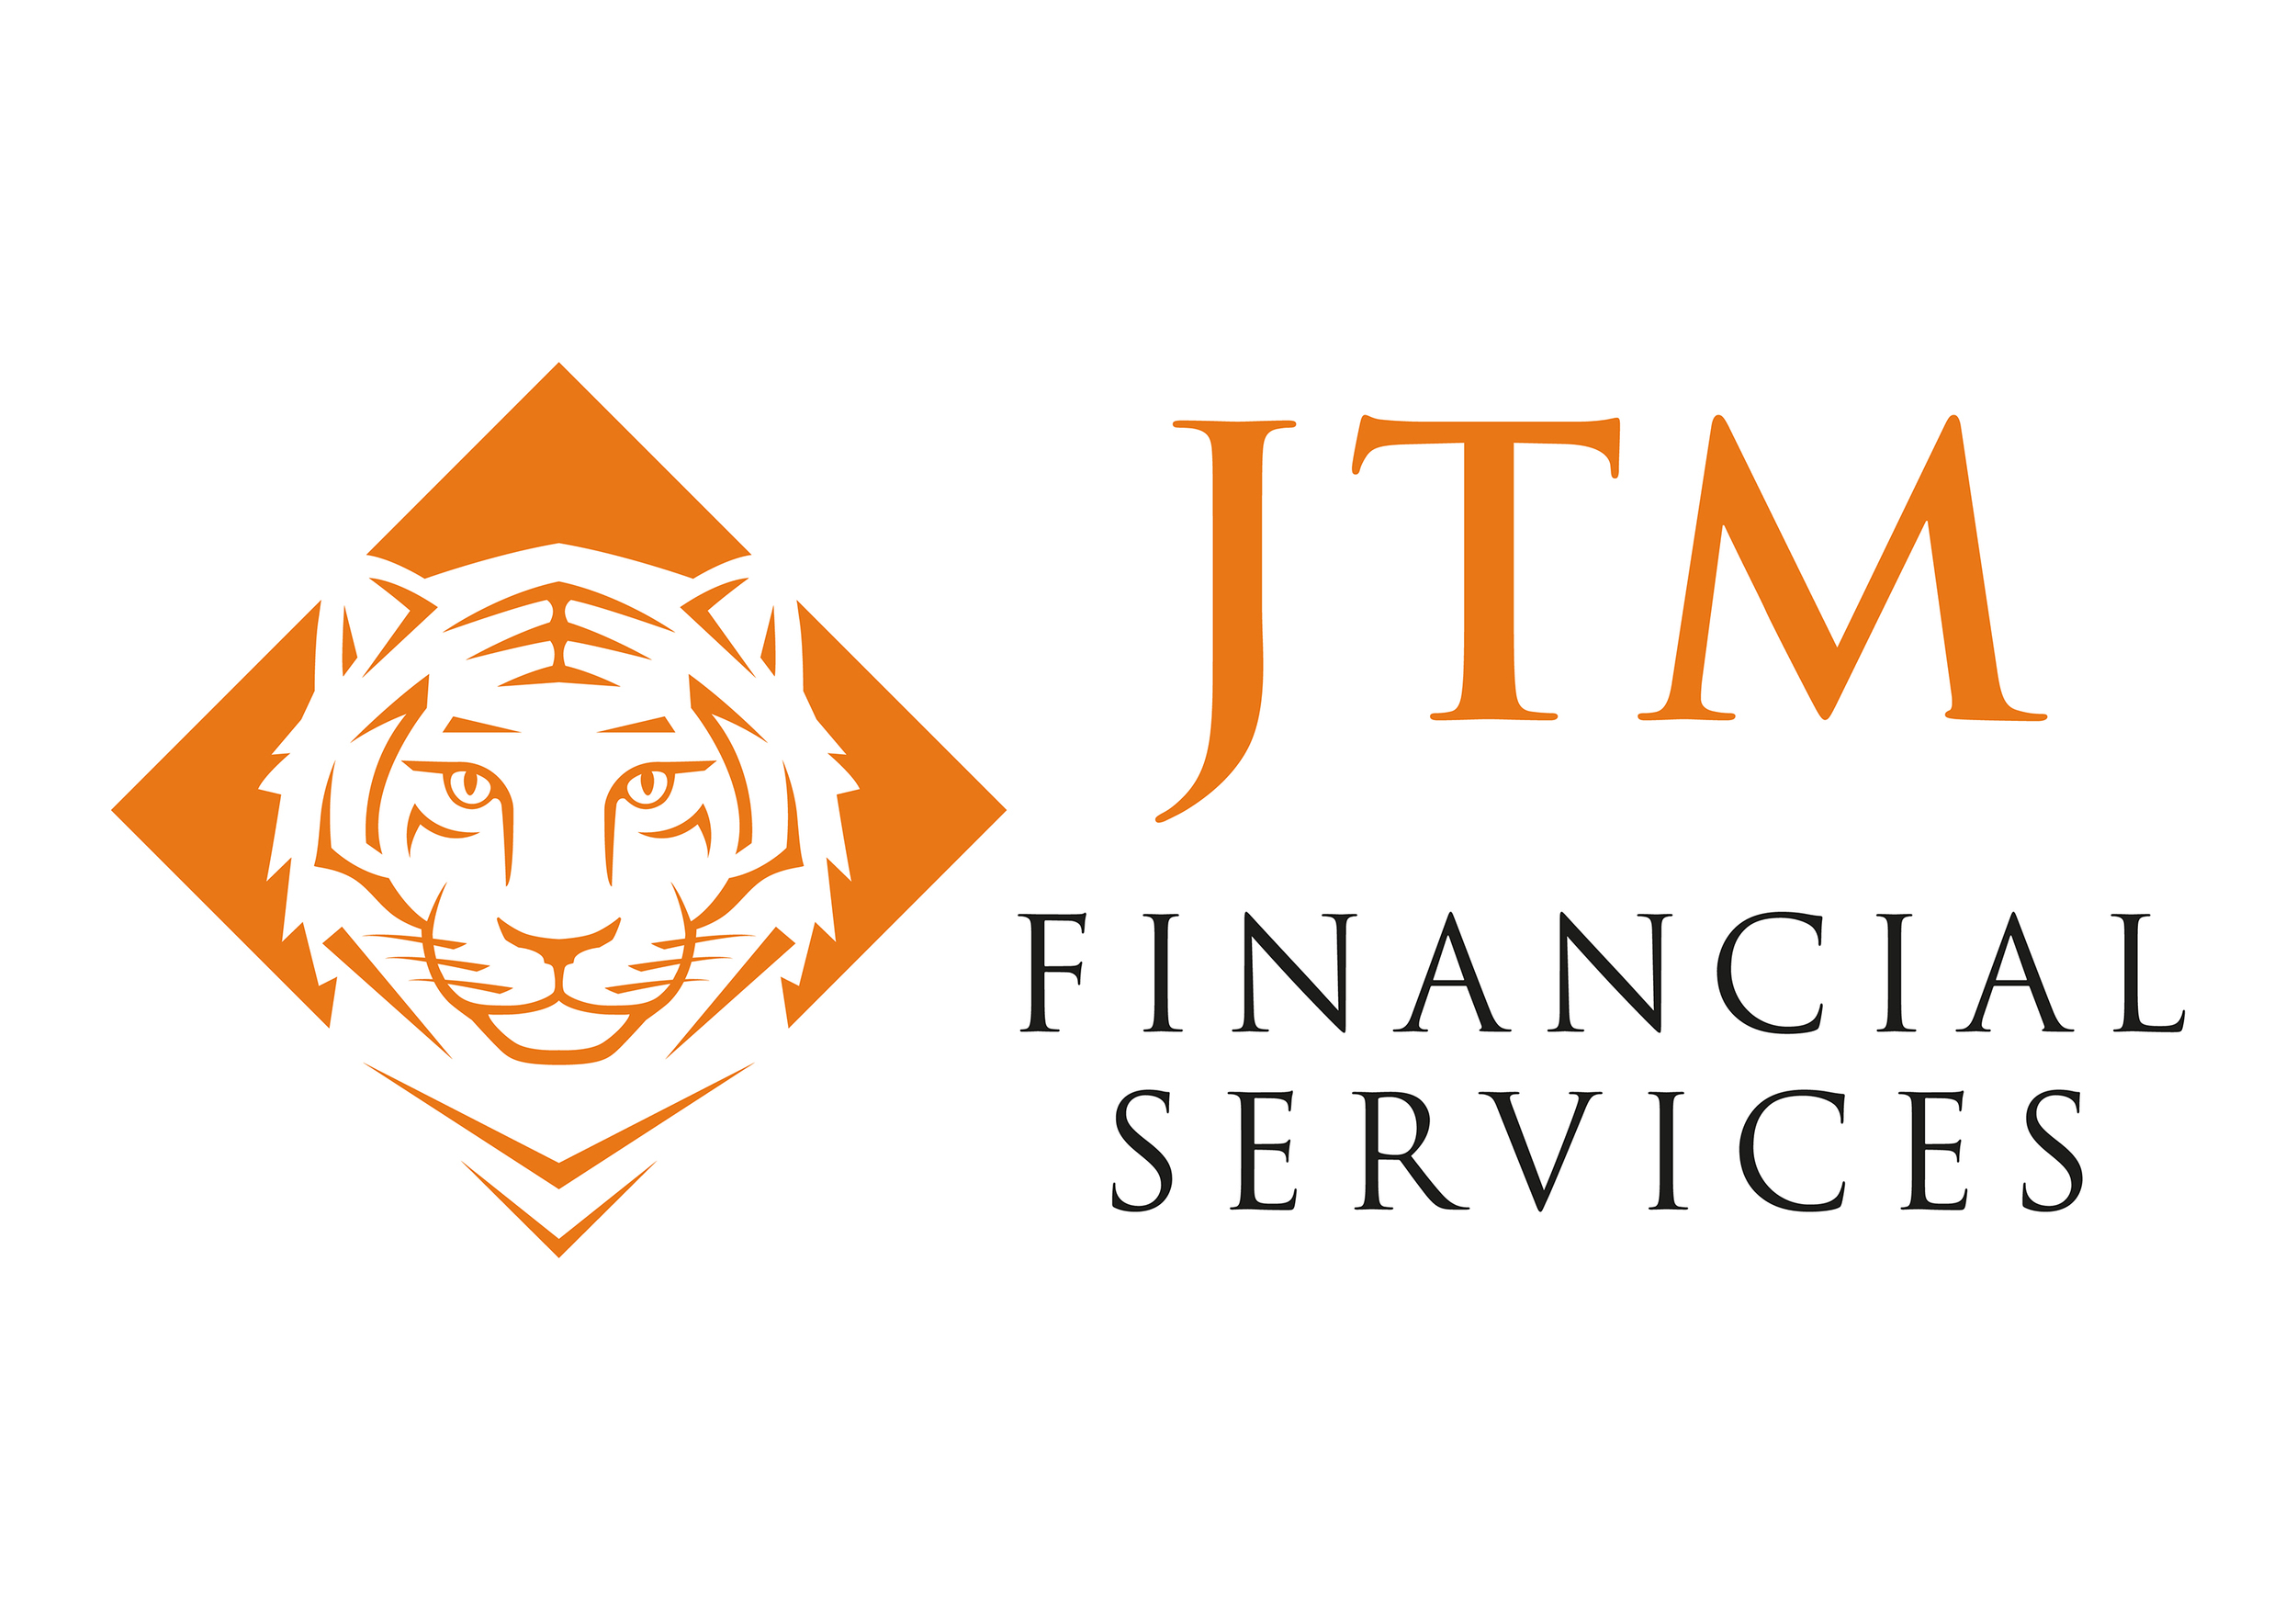 JTM Financial Services